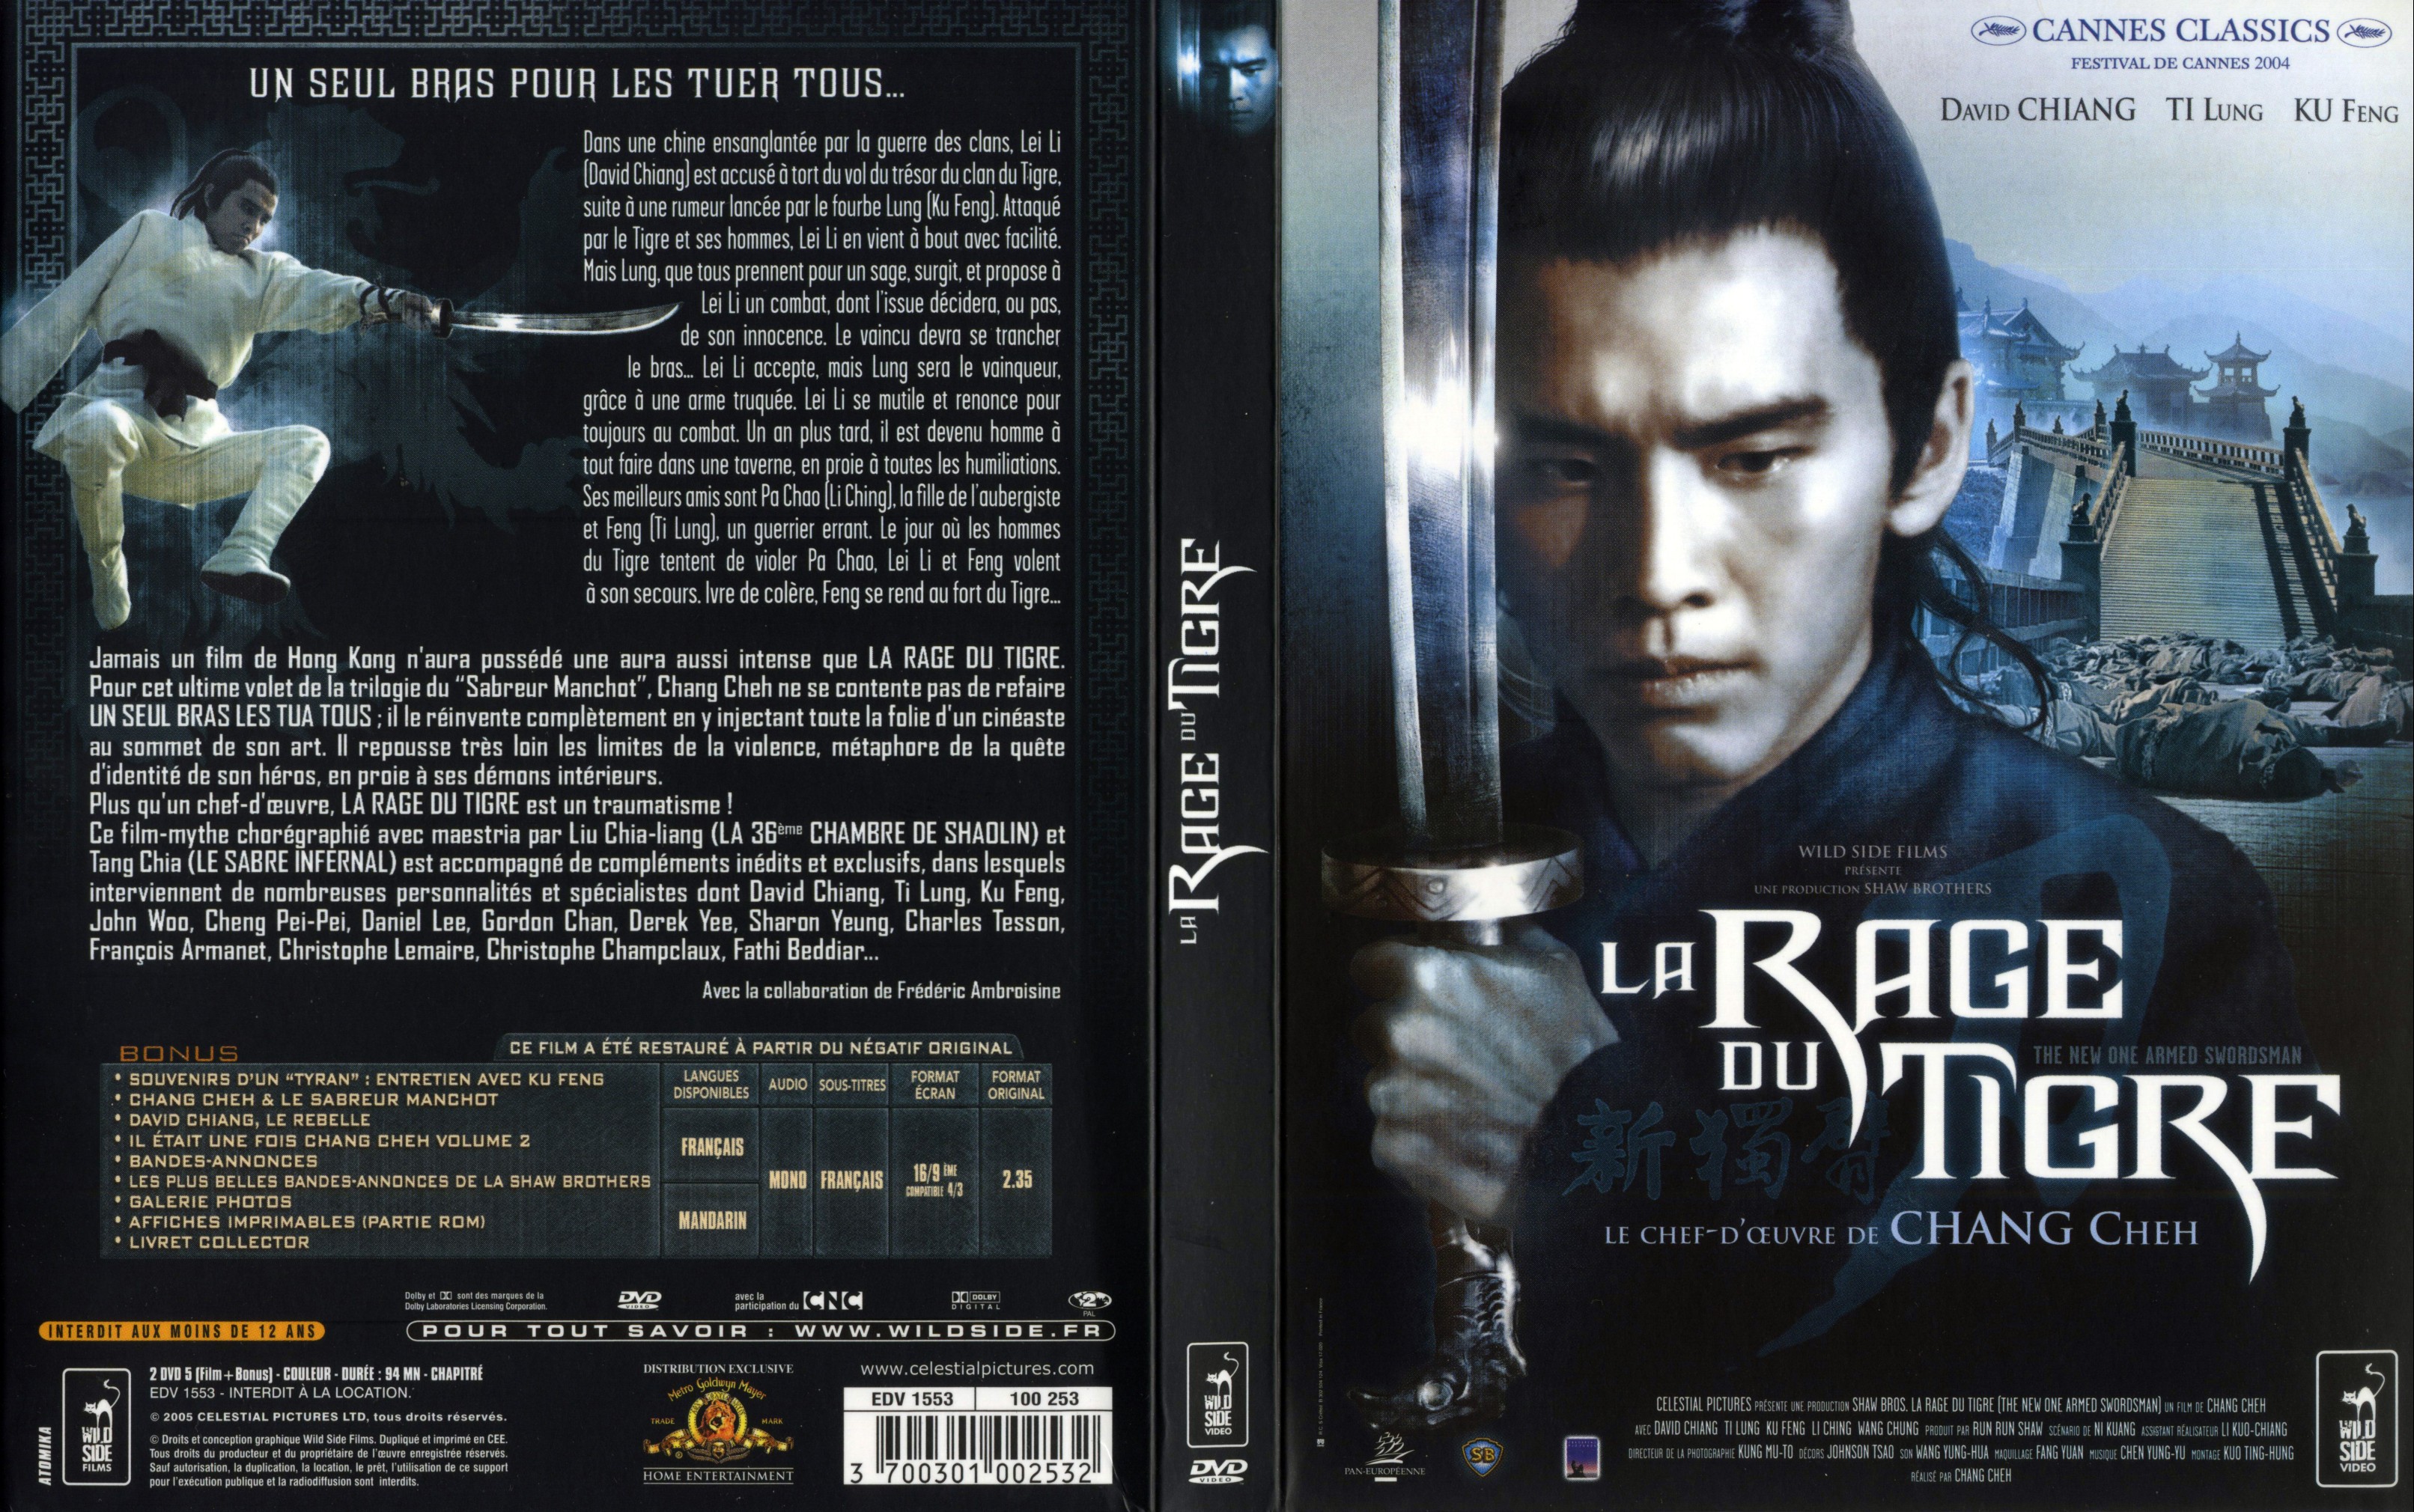 Jaquette DVD La rage du tigre v2